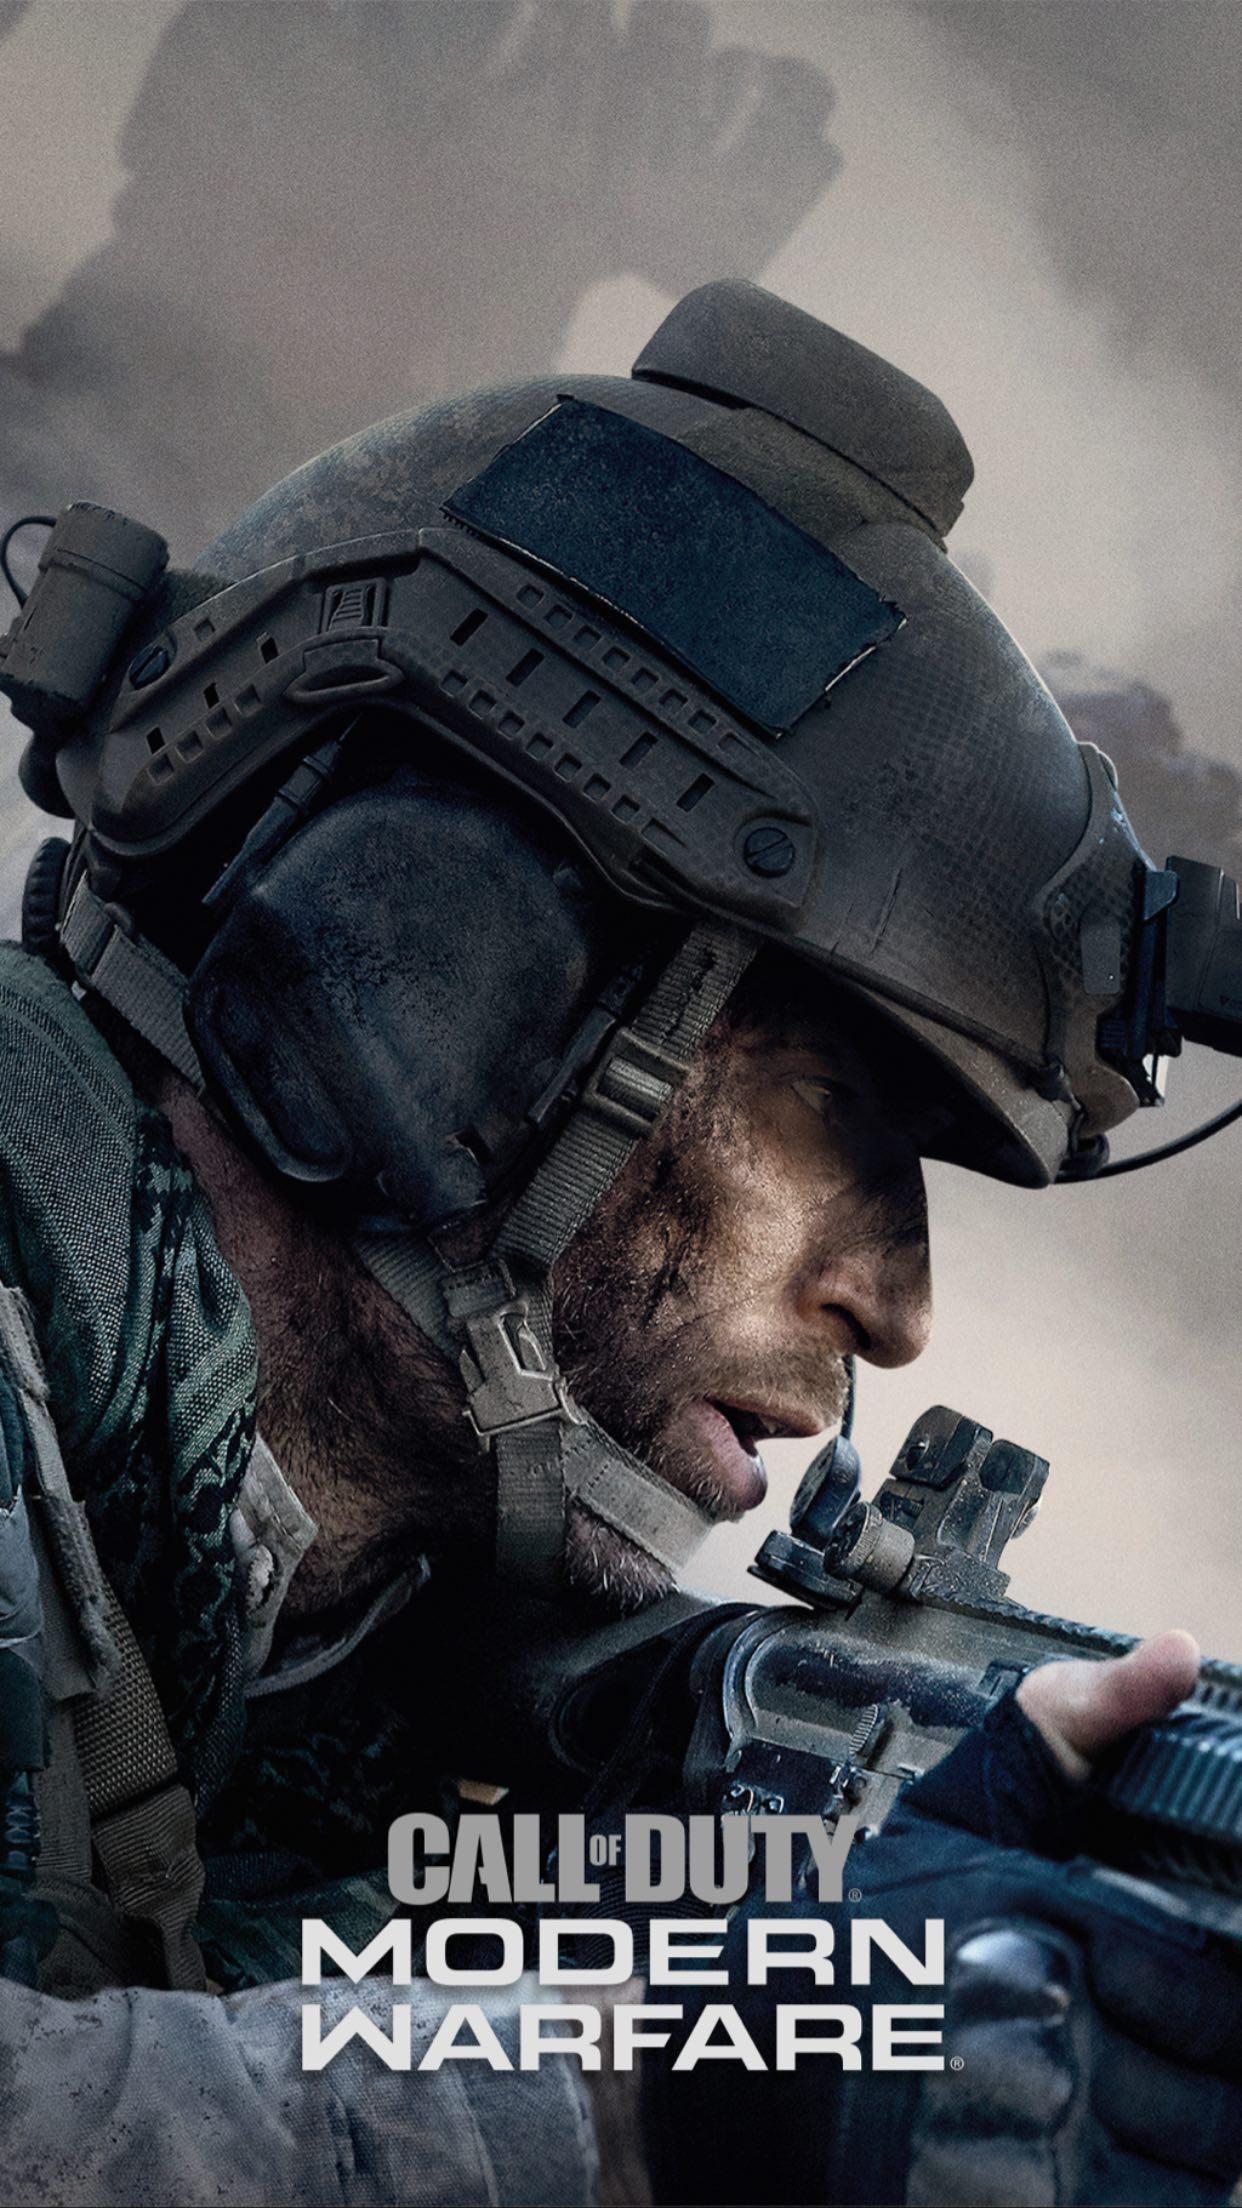 Call of duty: Modern Warfare Mobile Phone Wallpapers set